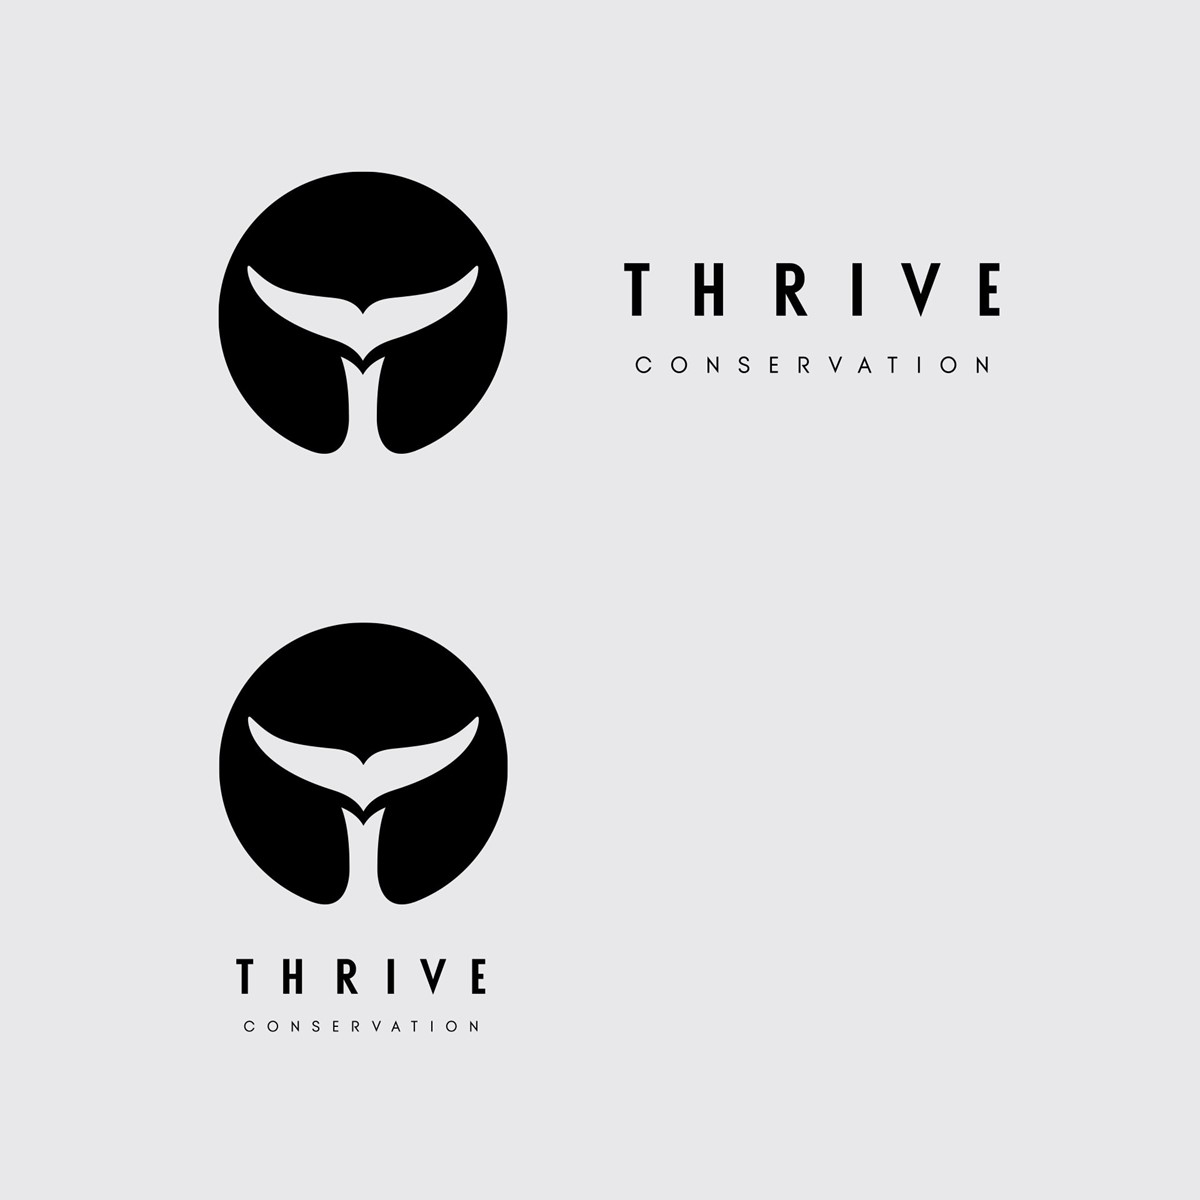 Thrive Conservation logo lock-ups – minimal versions. Brand identity design by Superfried.